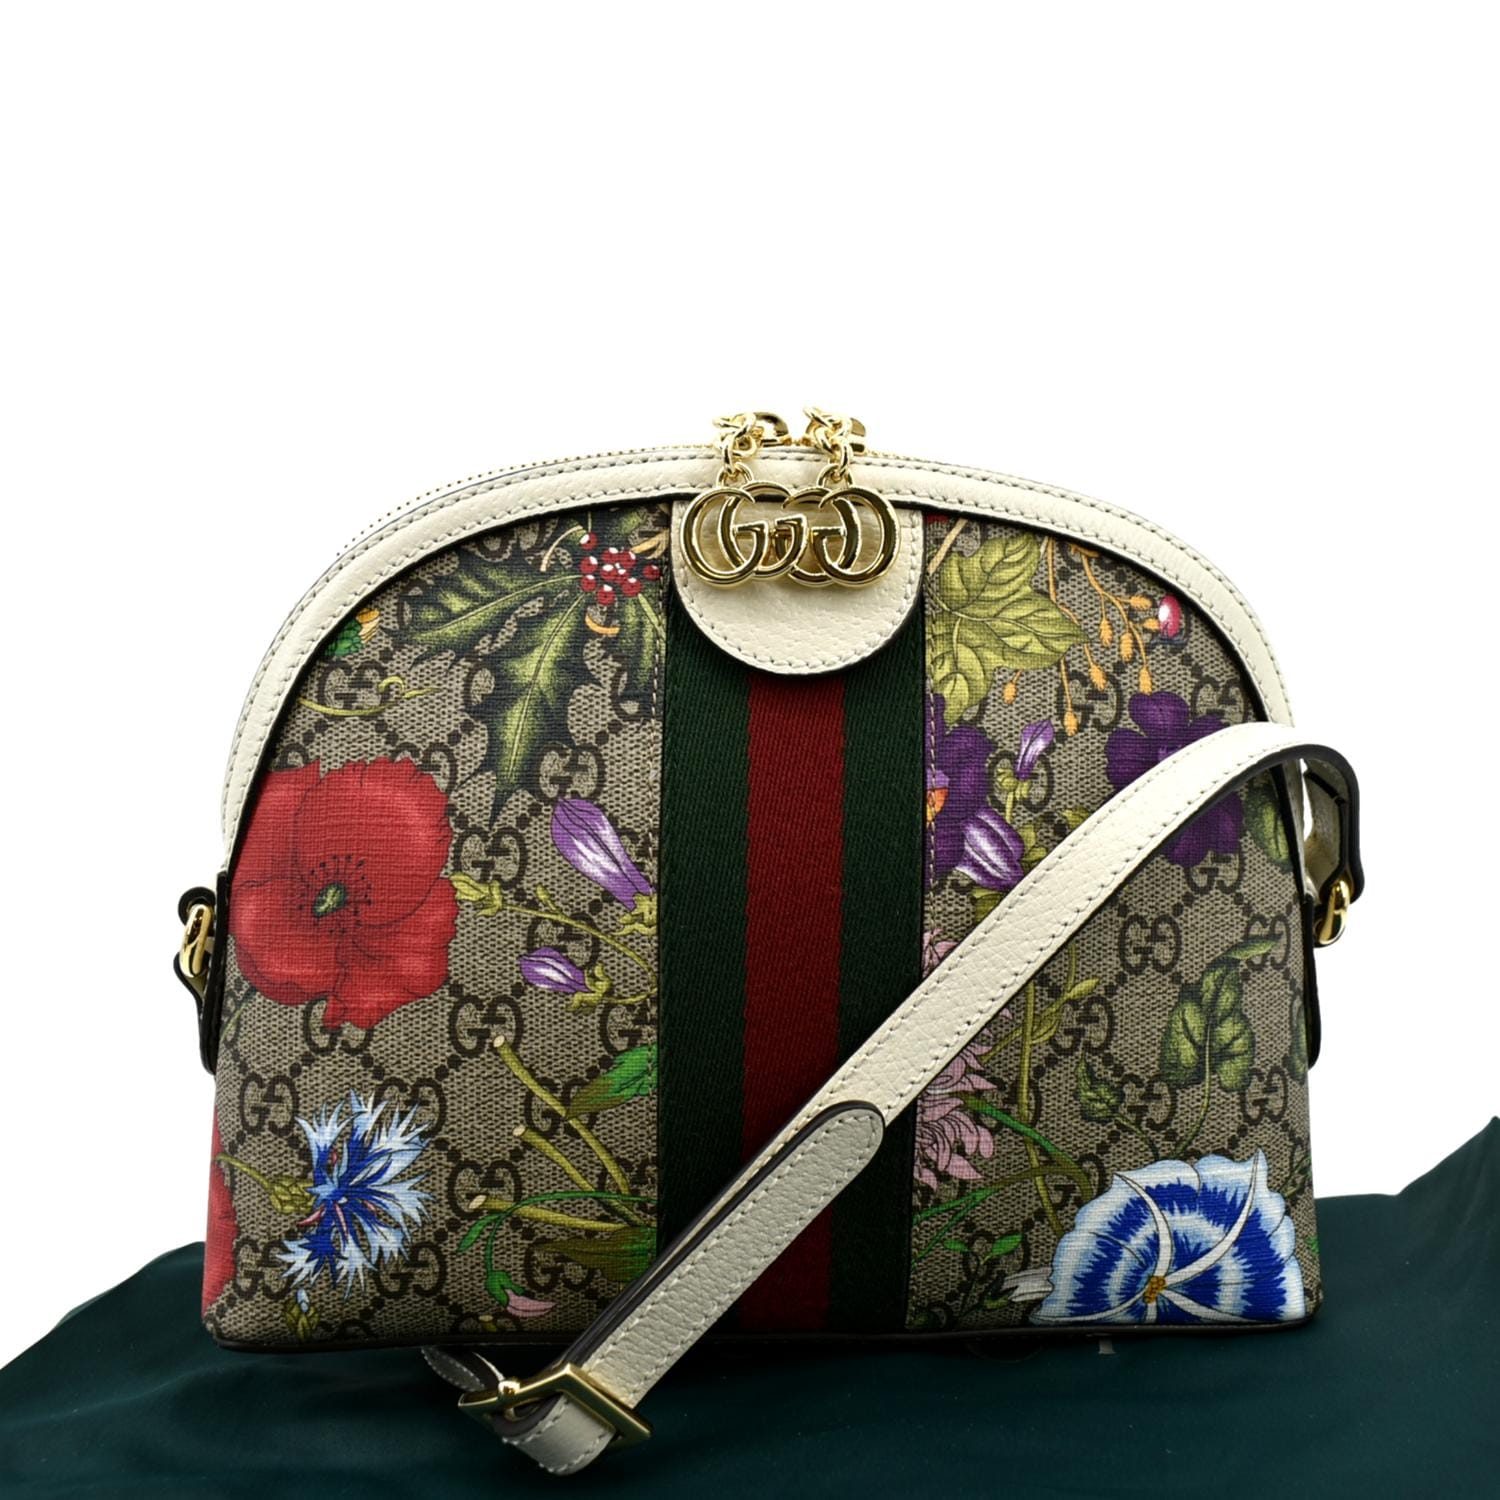 Ophidia Canvas Shoulder Bag in Beige - Gucci